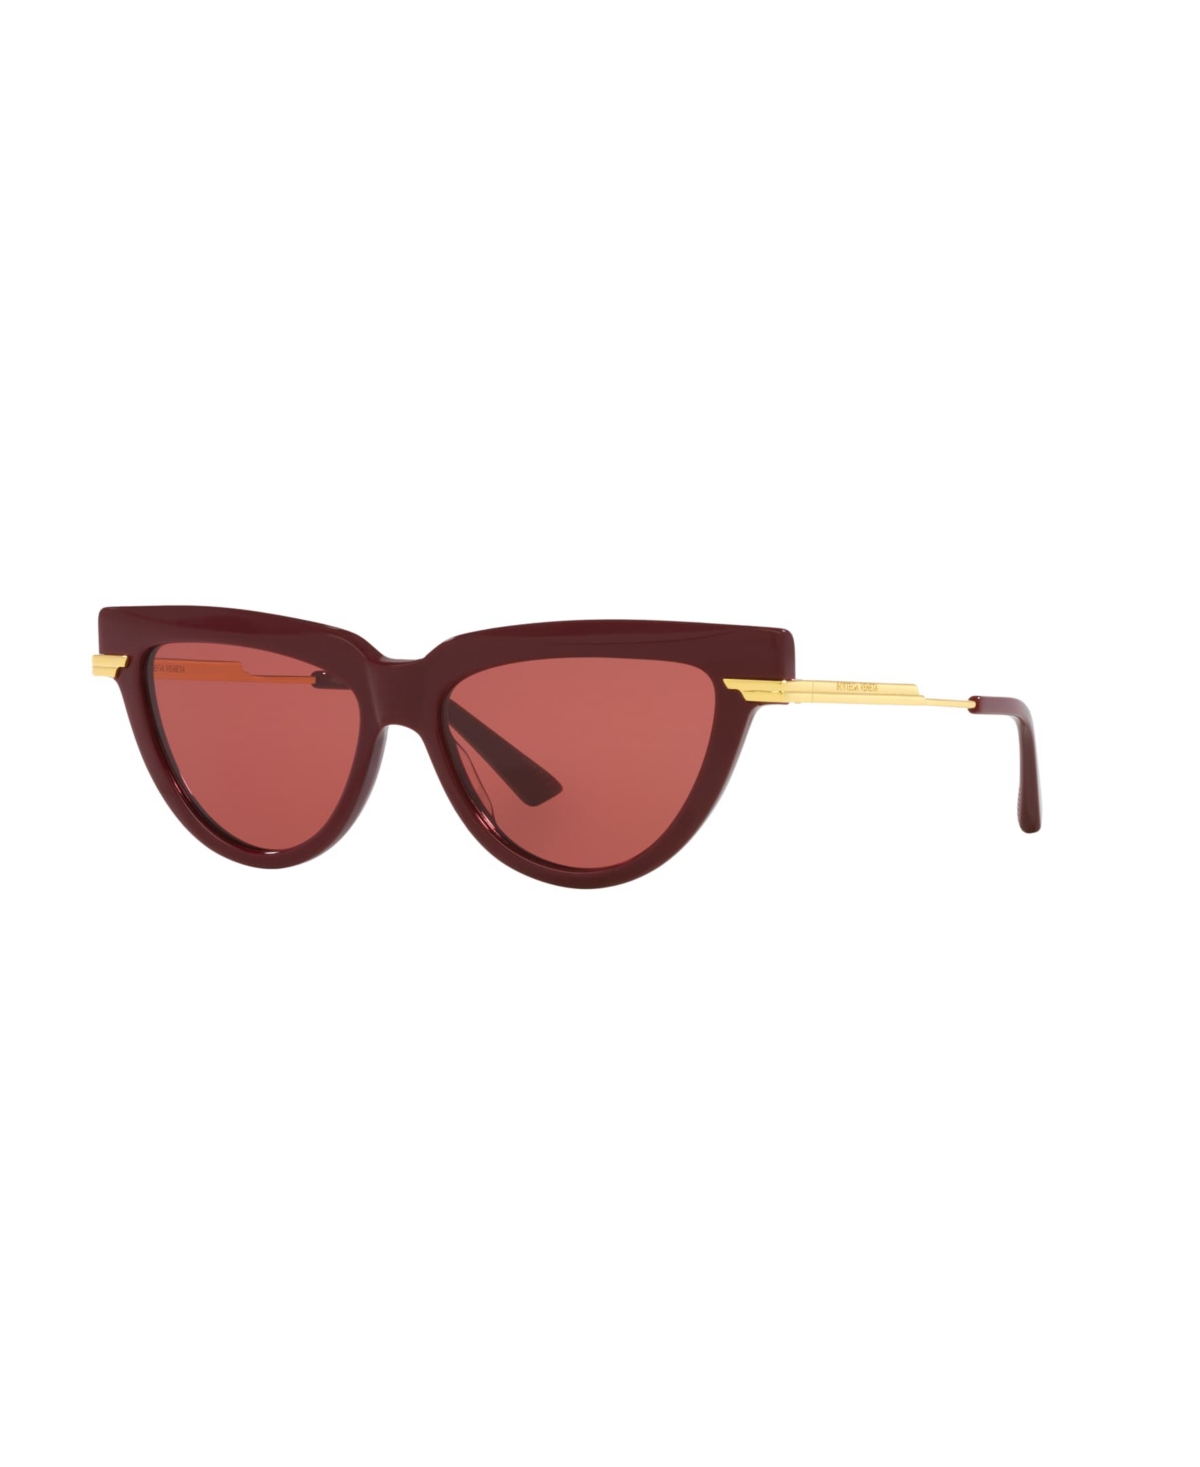 Women's Sunglasses, Bv1265S 6J000421 - Burgunday